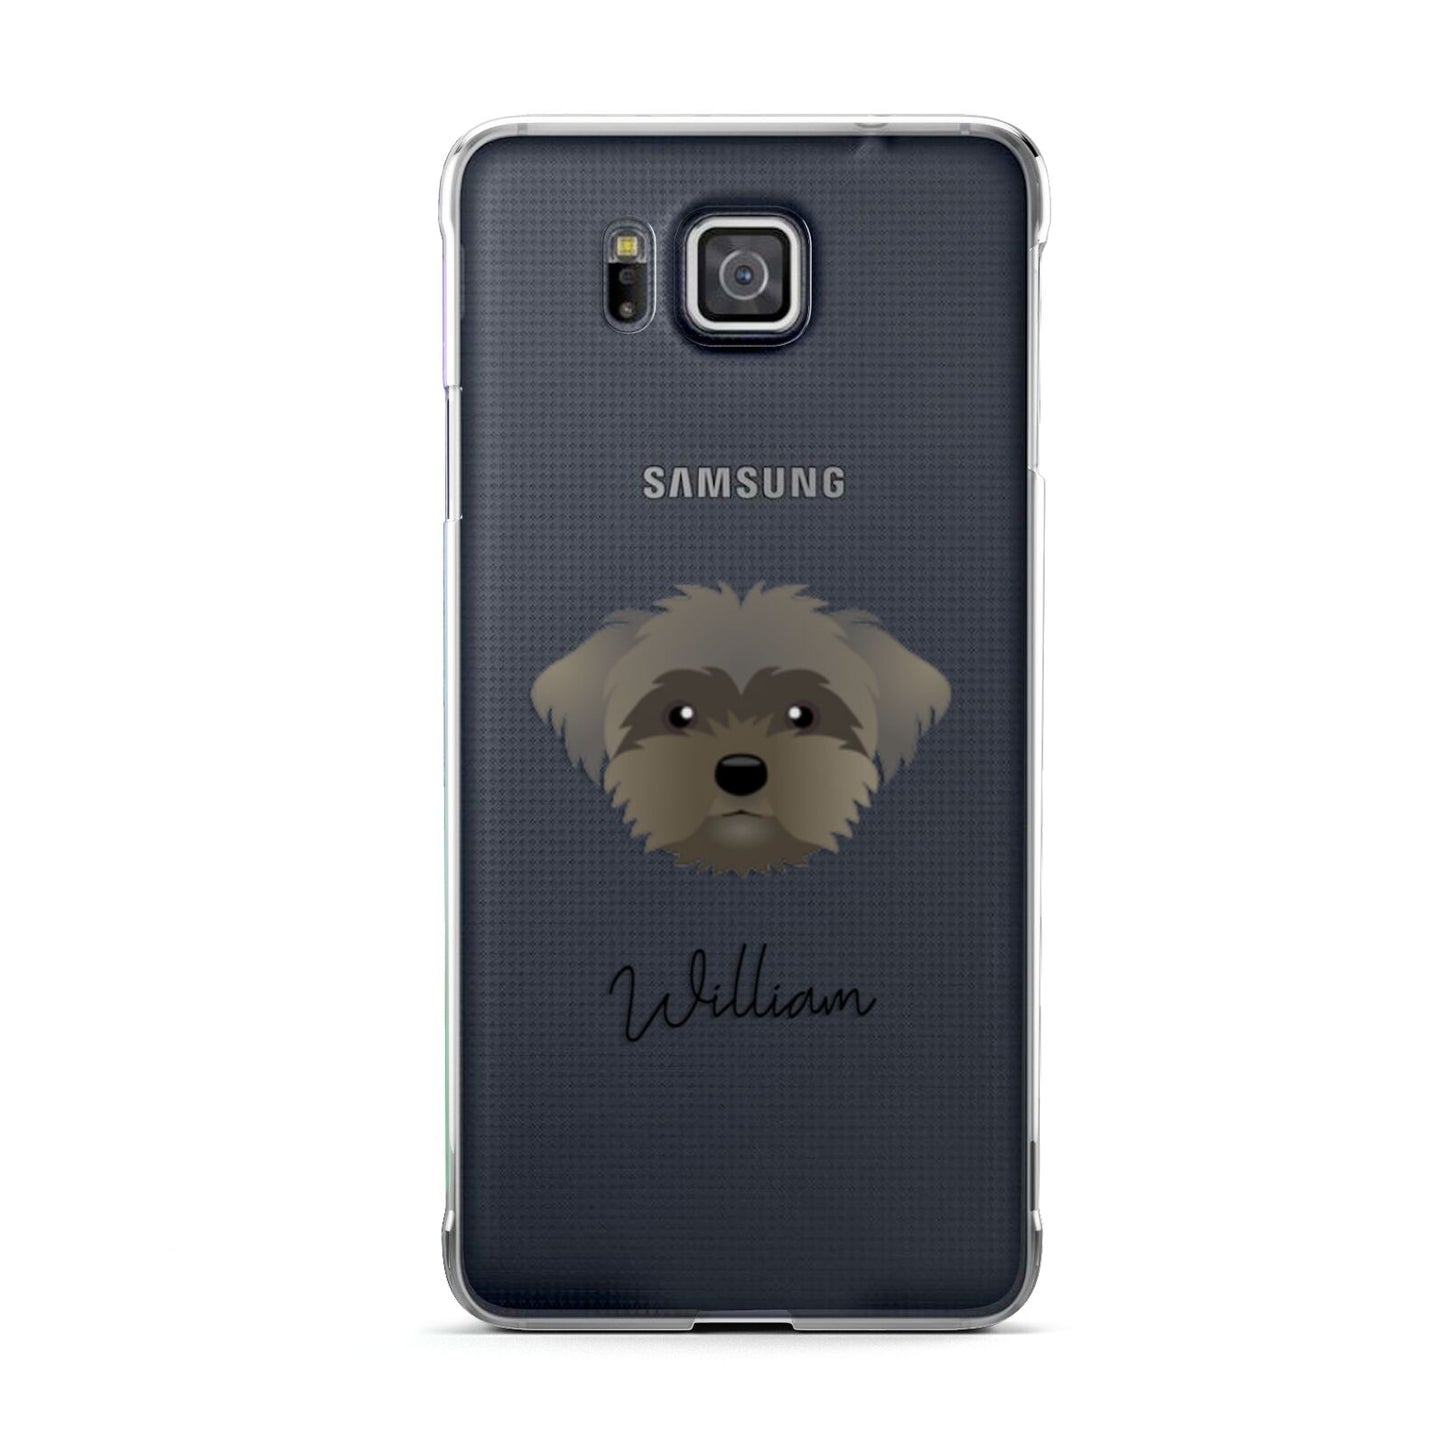 Peek a poo Personalised Samsung Galaxy Alpha Case